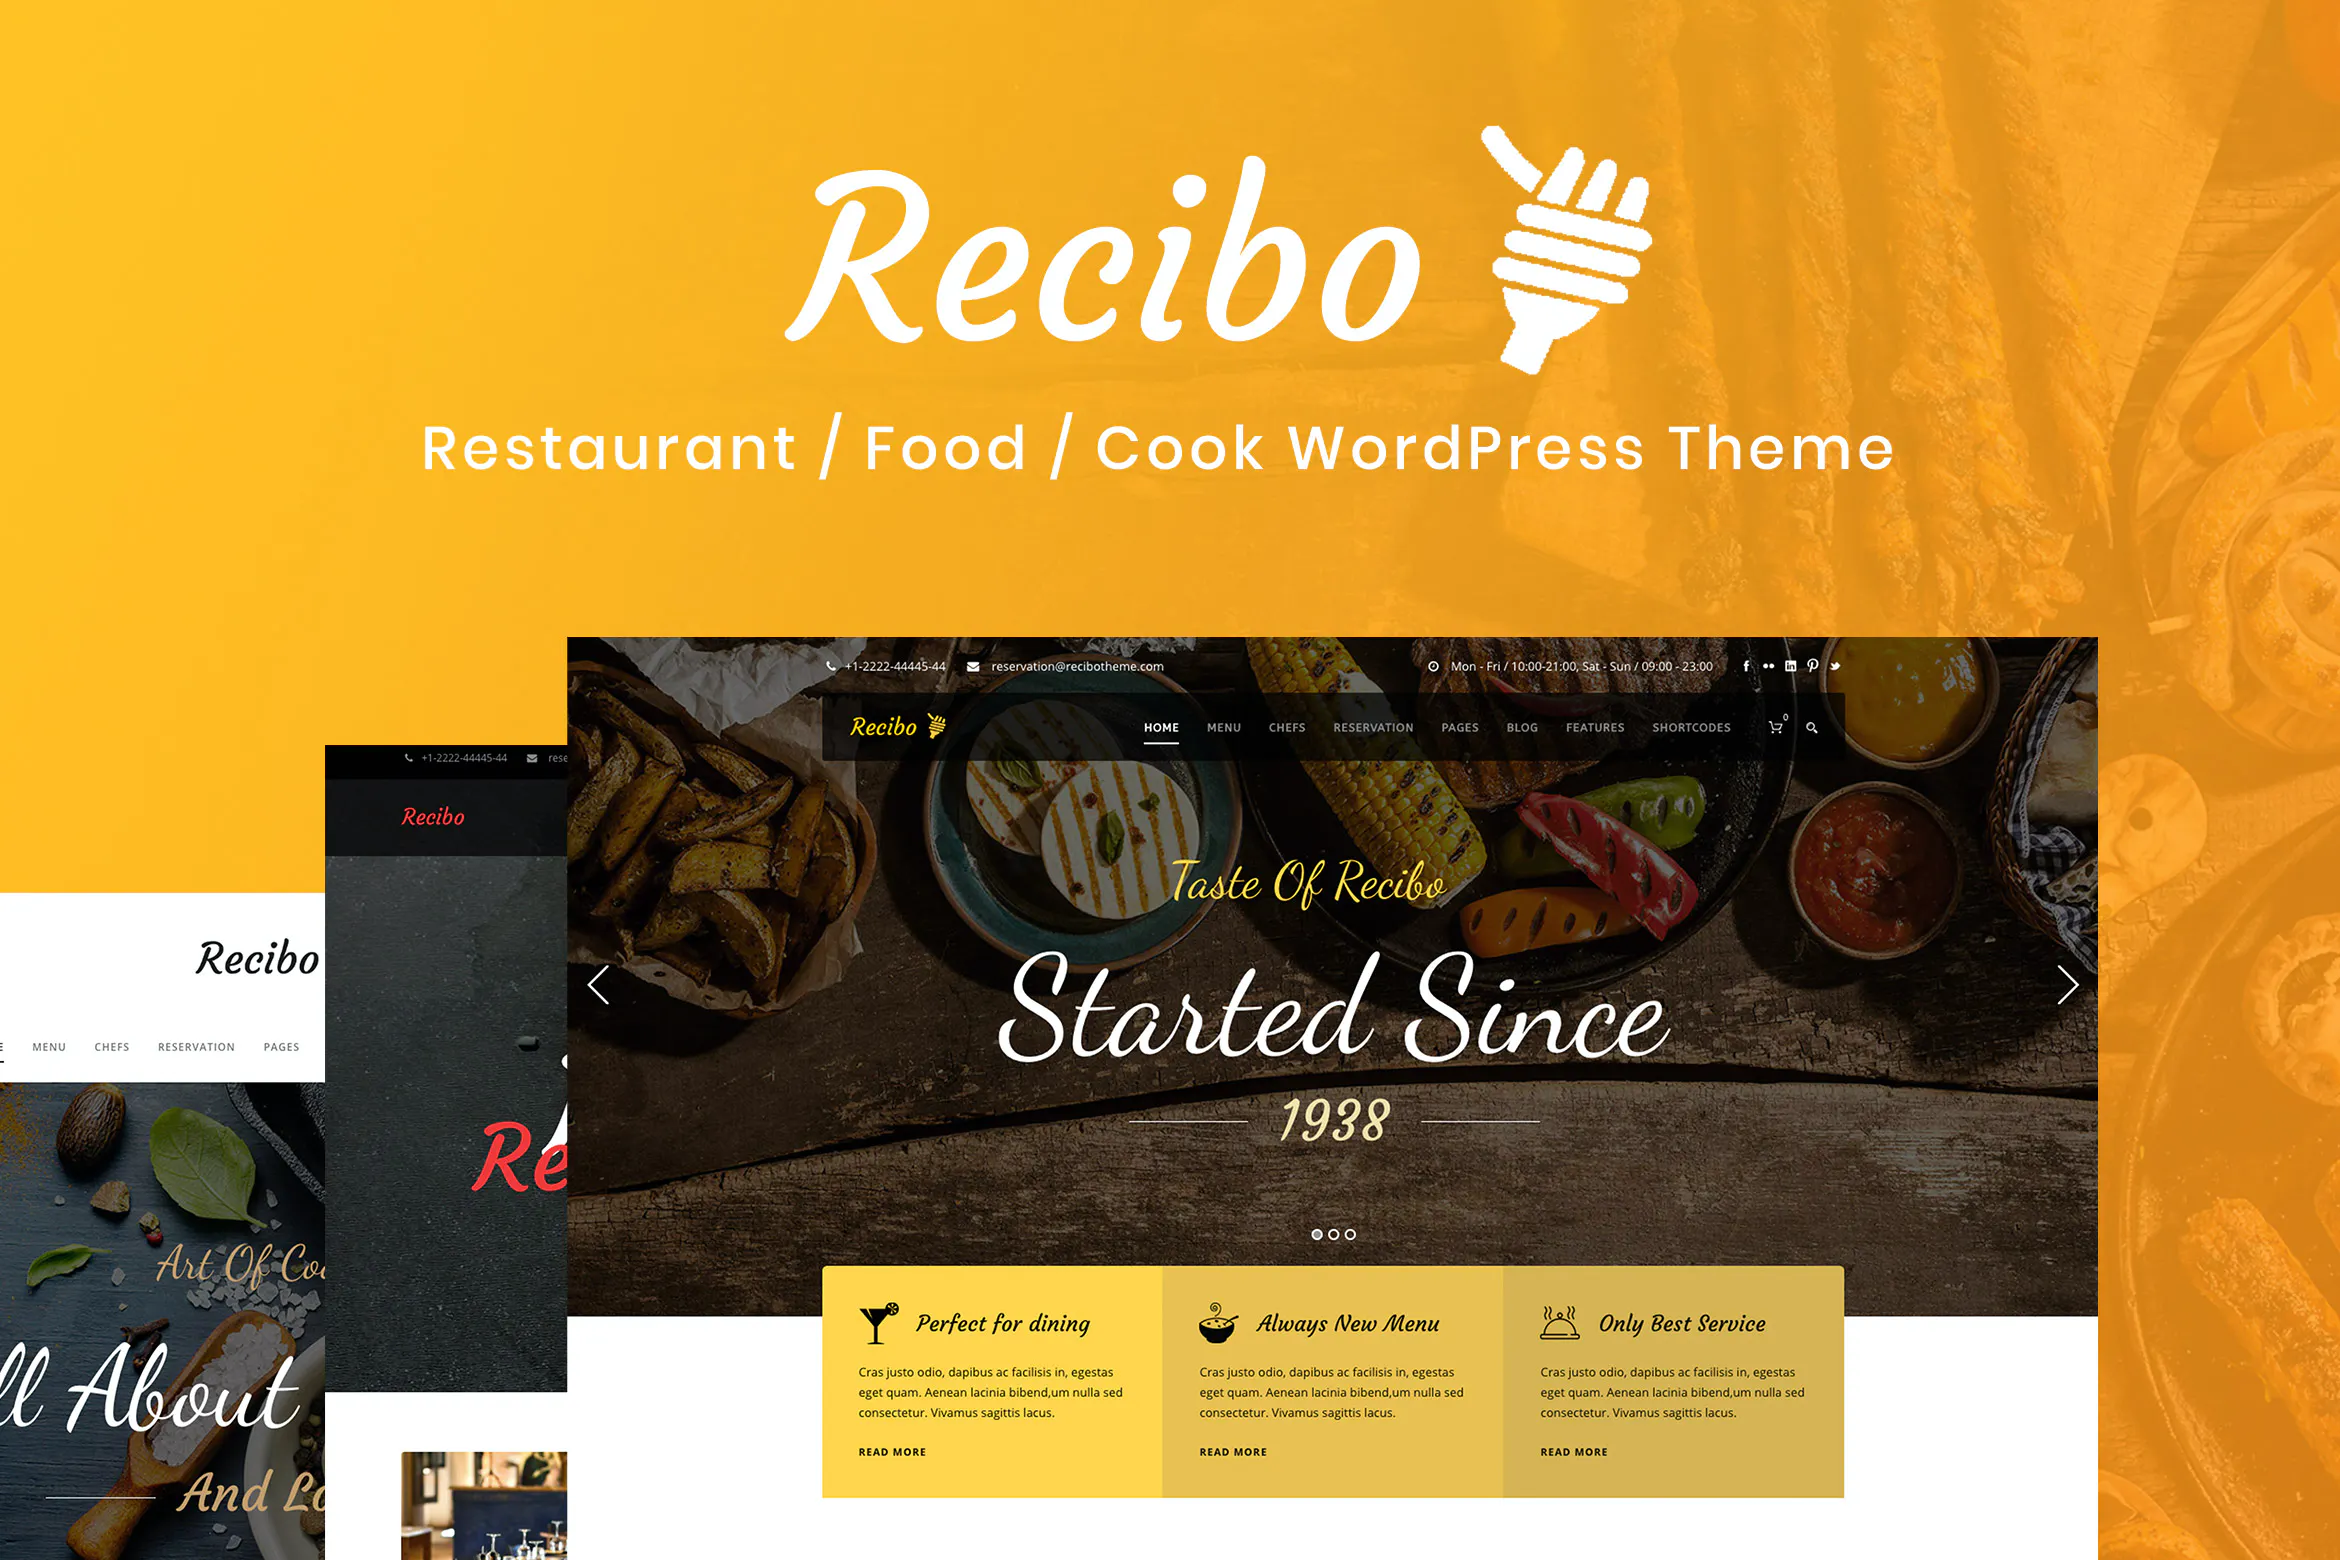 Recibo – Restaurant / Food / Cook WordPress Theme